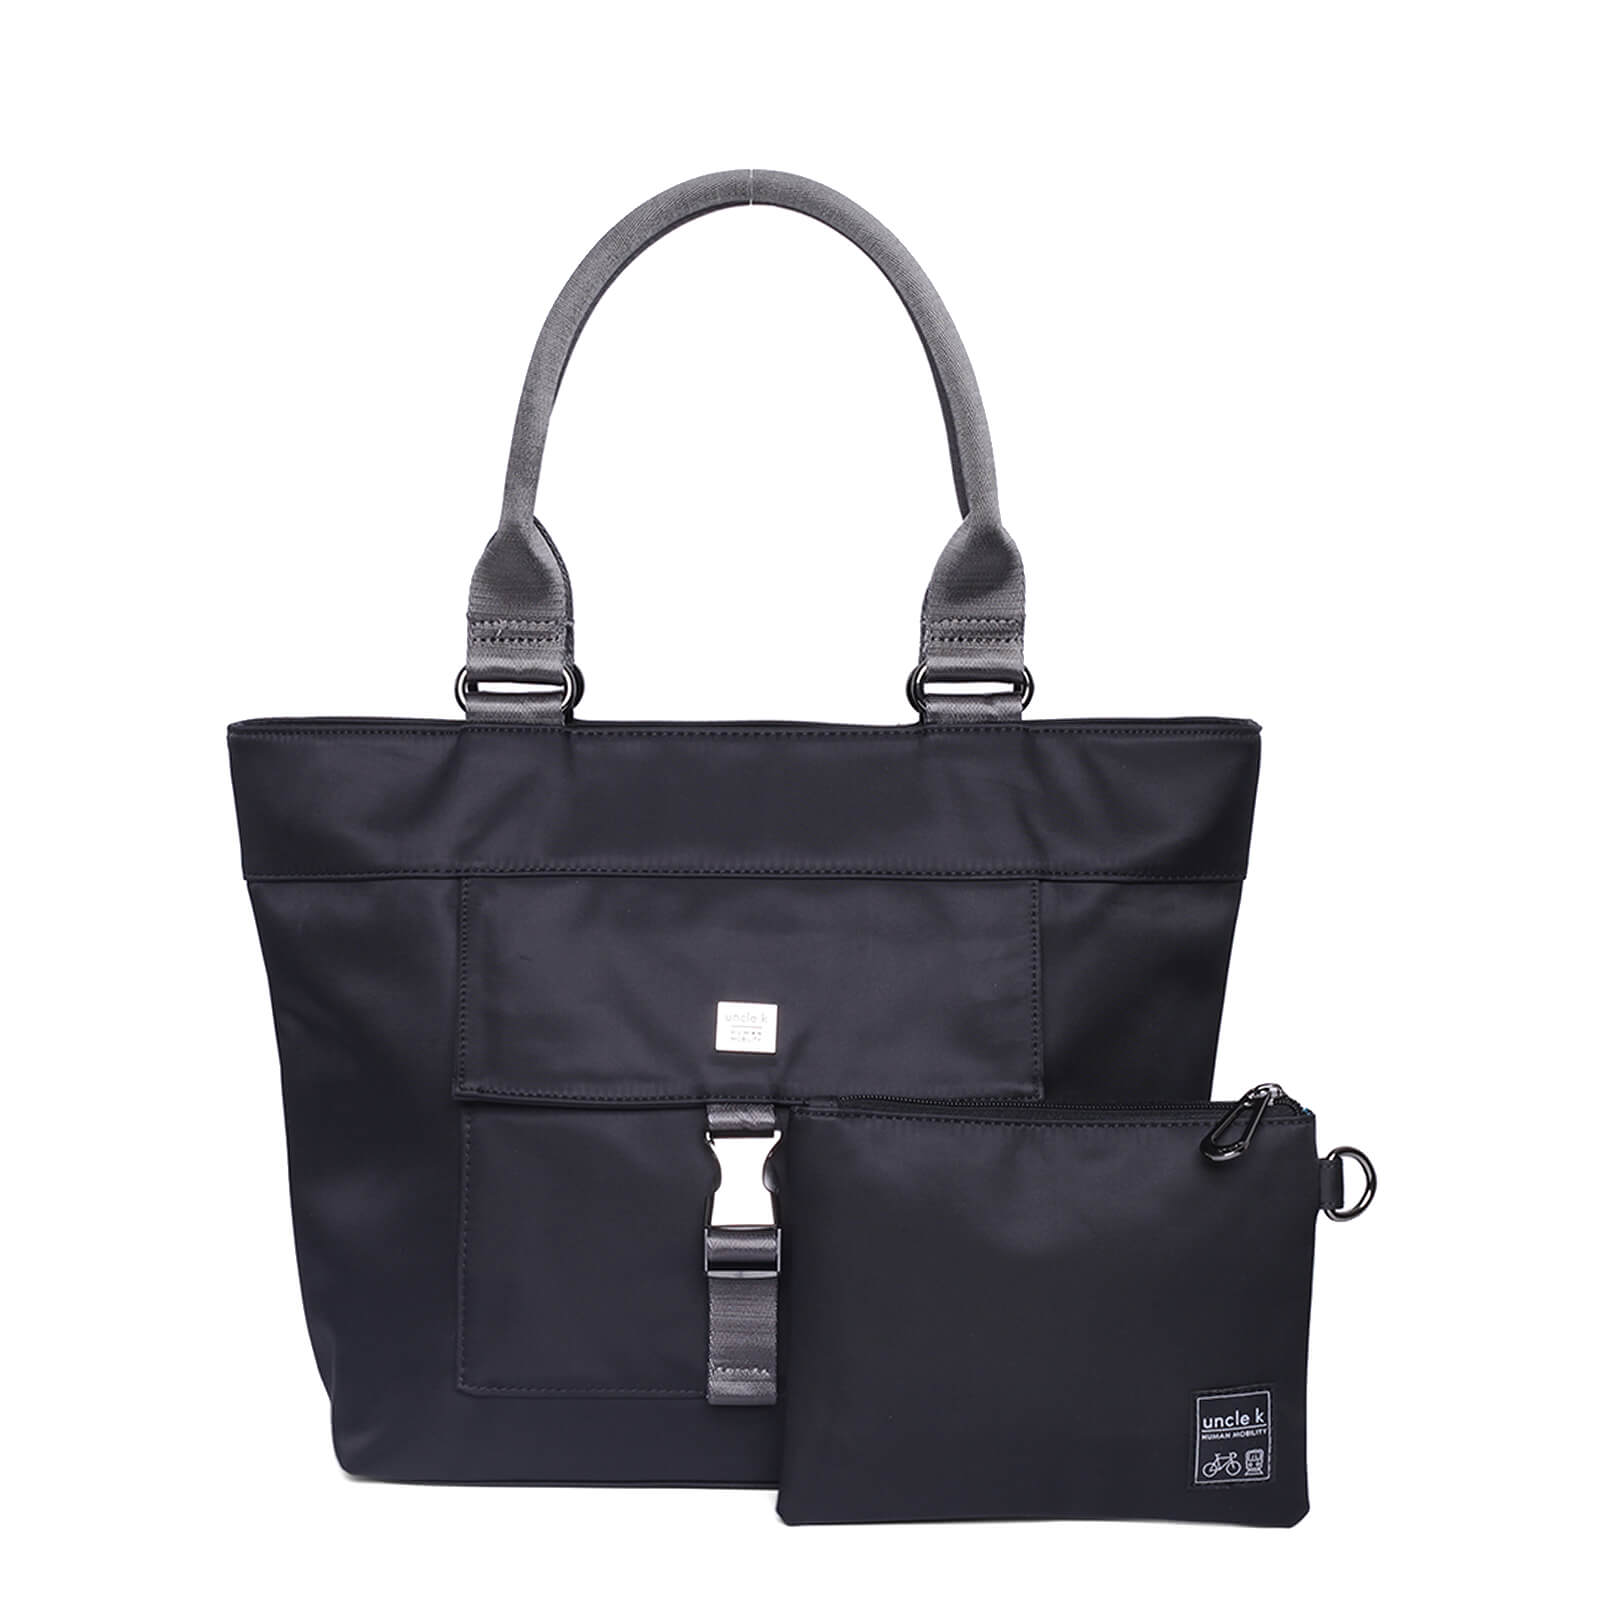 bolsa-shopping-bag-nylon-bnt-61039-unclek-3